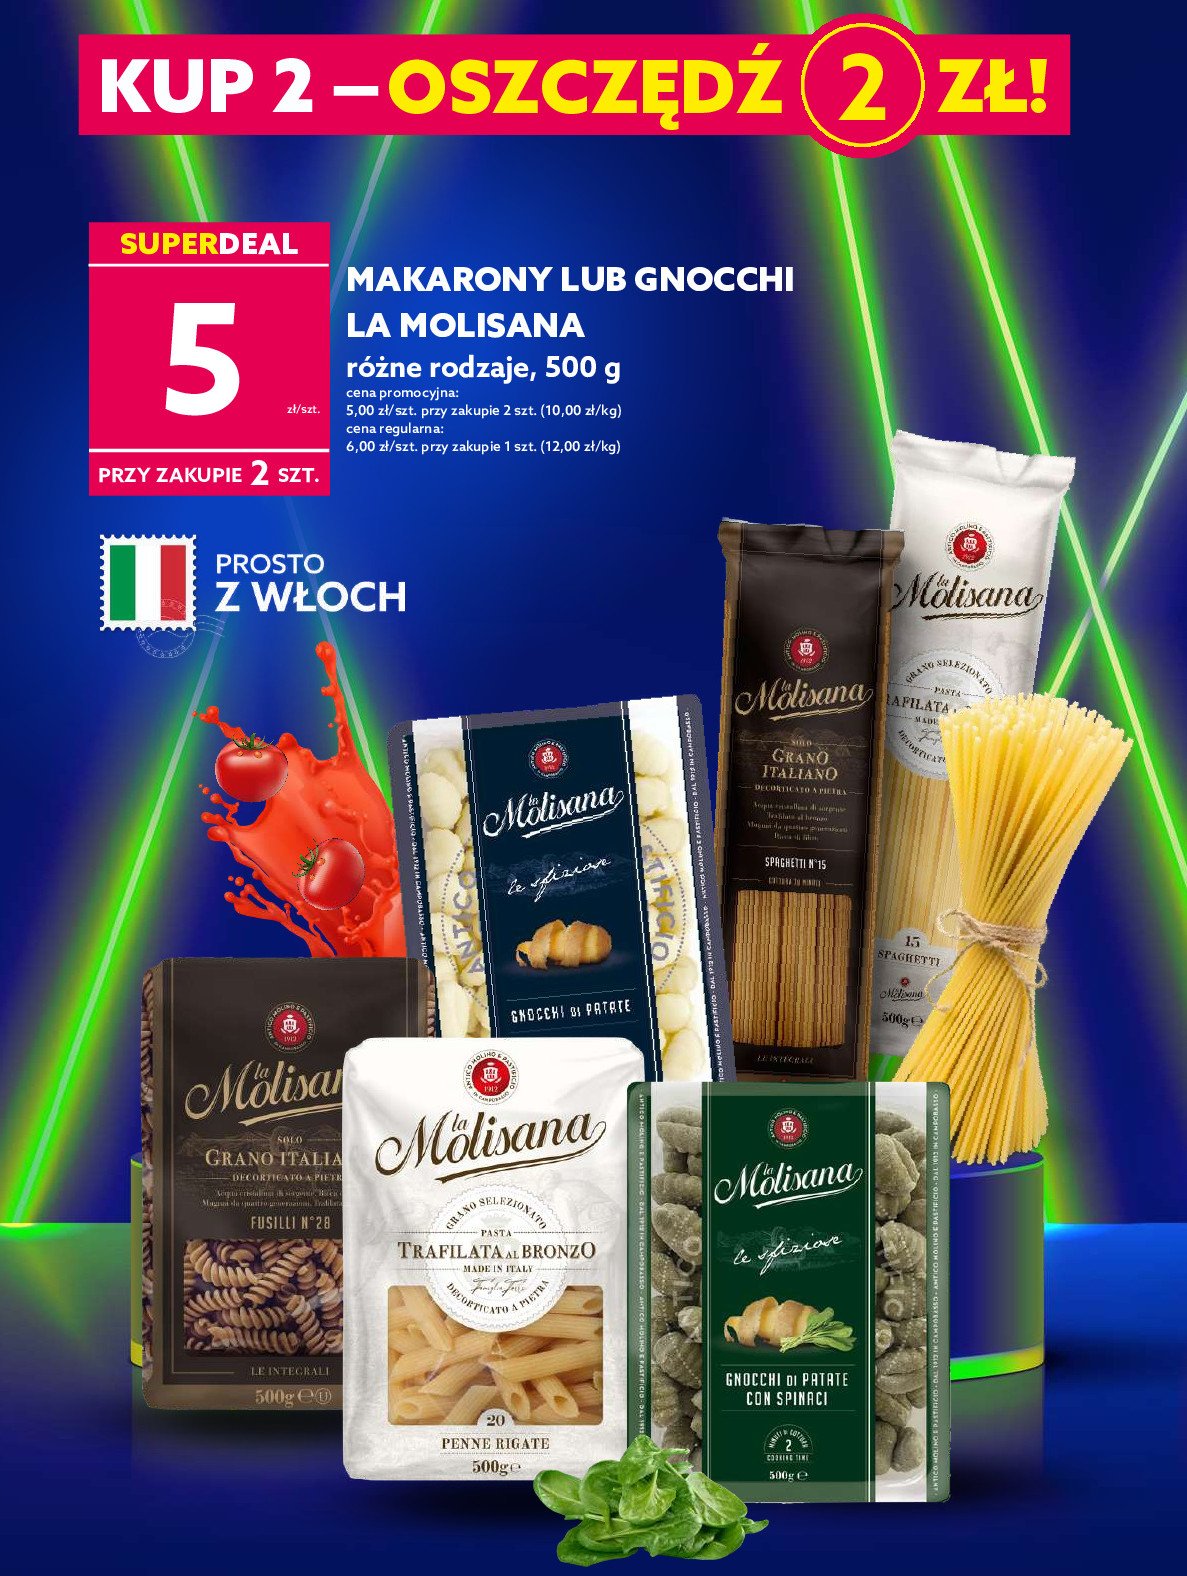 Makaron spaghetti 15 La molisana promocja